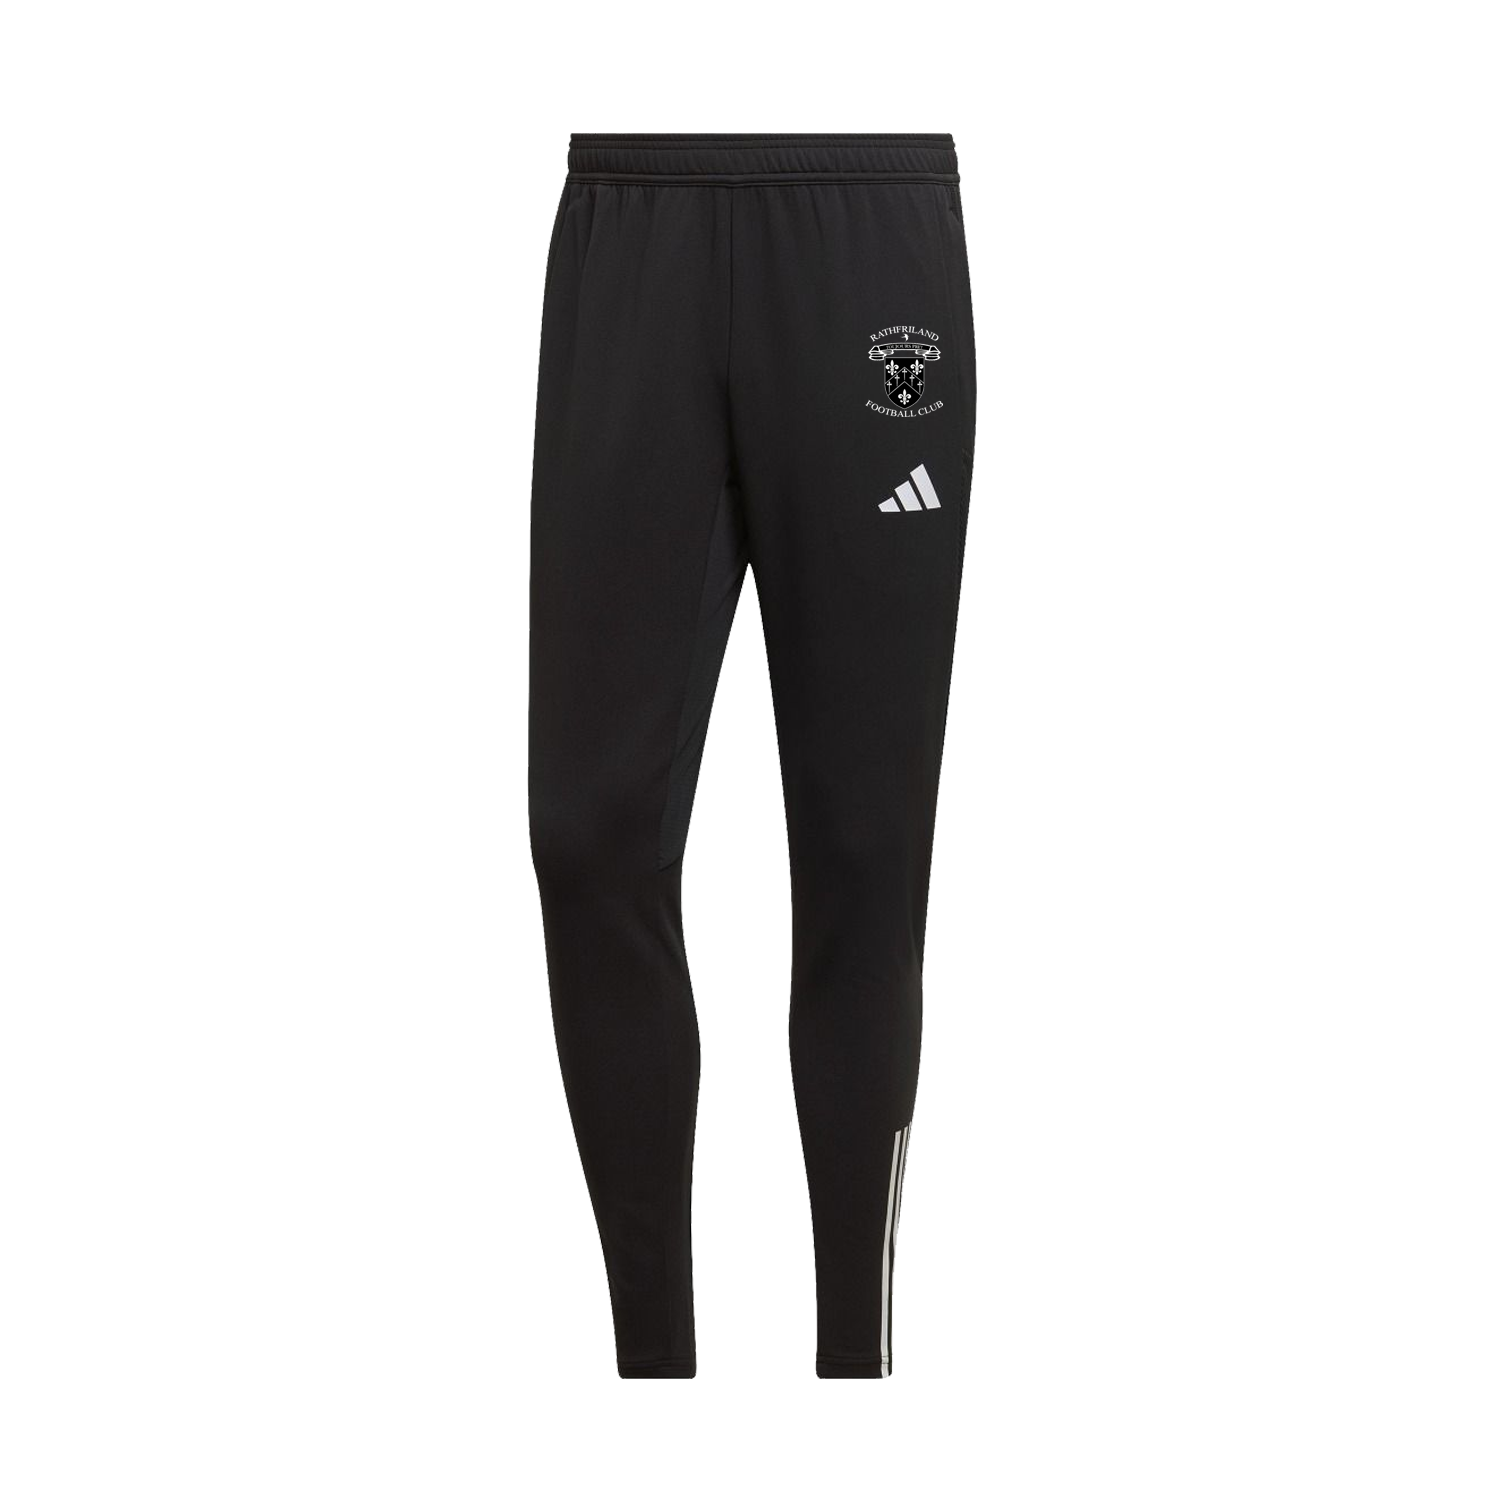 Rathfriland FC Adidas Training Pants Black